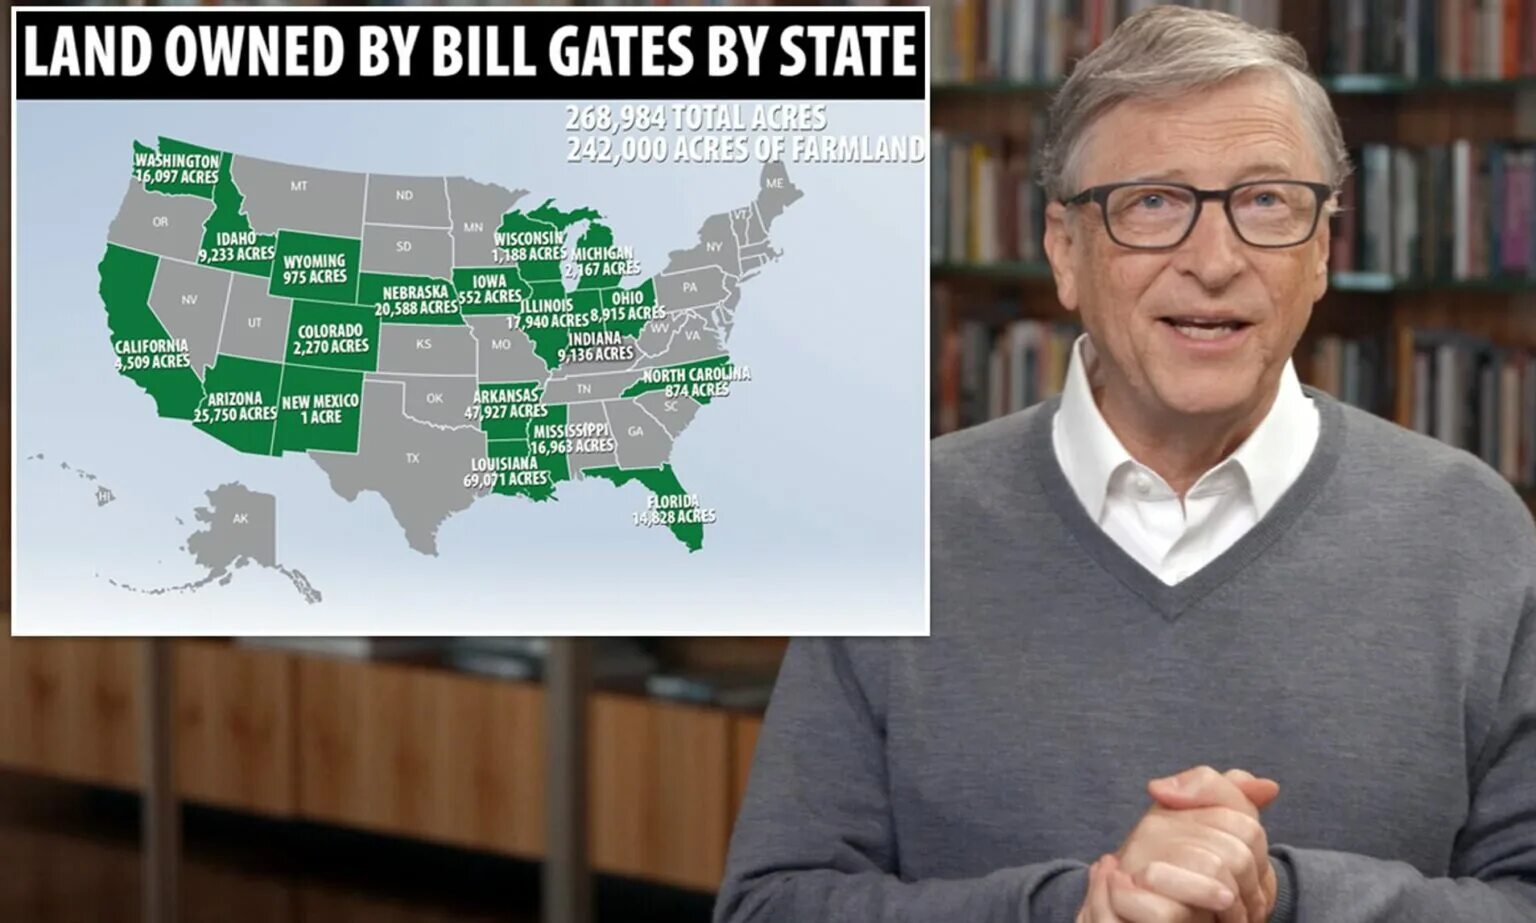 Билл Гейтс (28 октября 1955). Билл Гейтс в 90-е. Билл Гейтс Машиах. Билл Гейтс 2002. Country bill